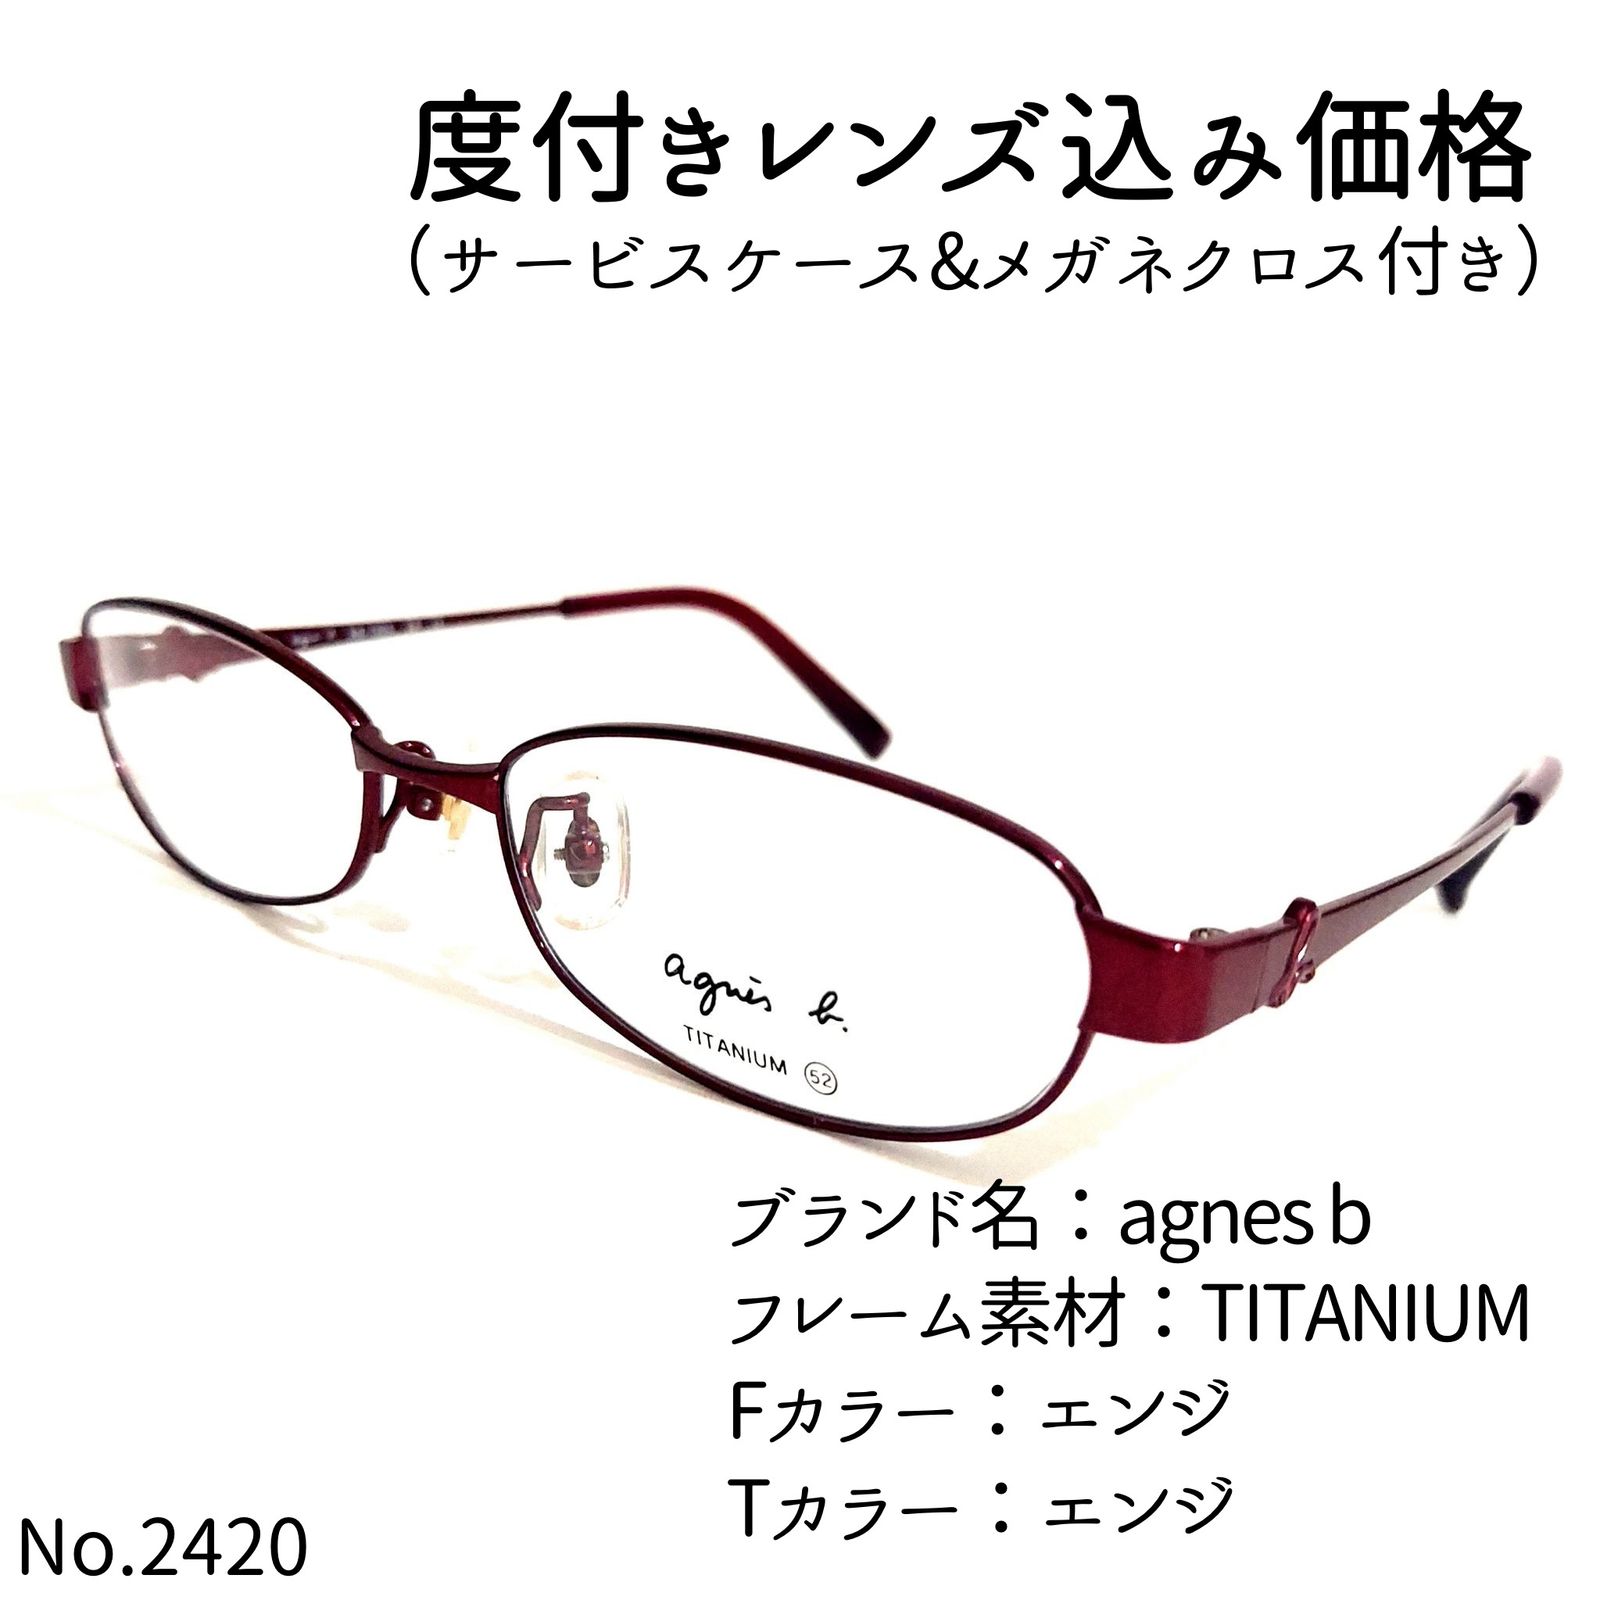 No.2420+メガネ agnes b【度数入り込み価格】 - サングラス/メガネ